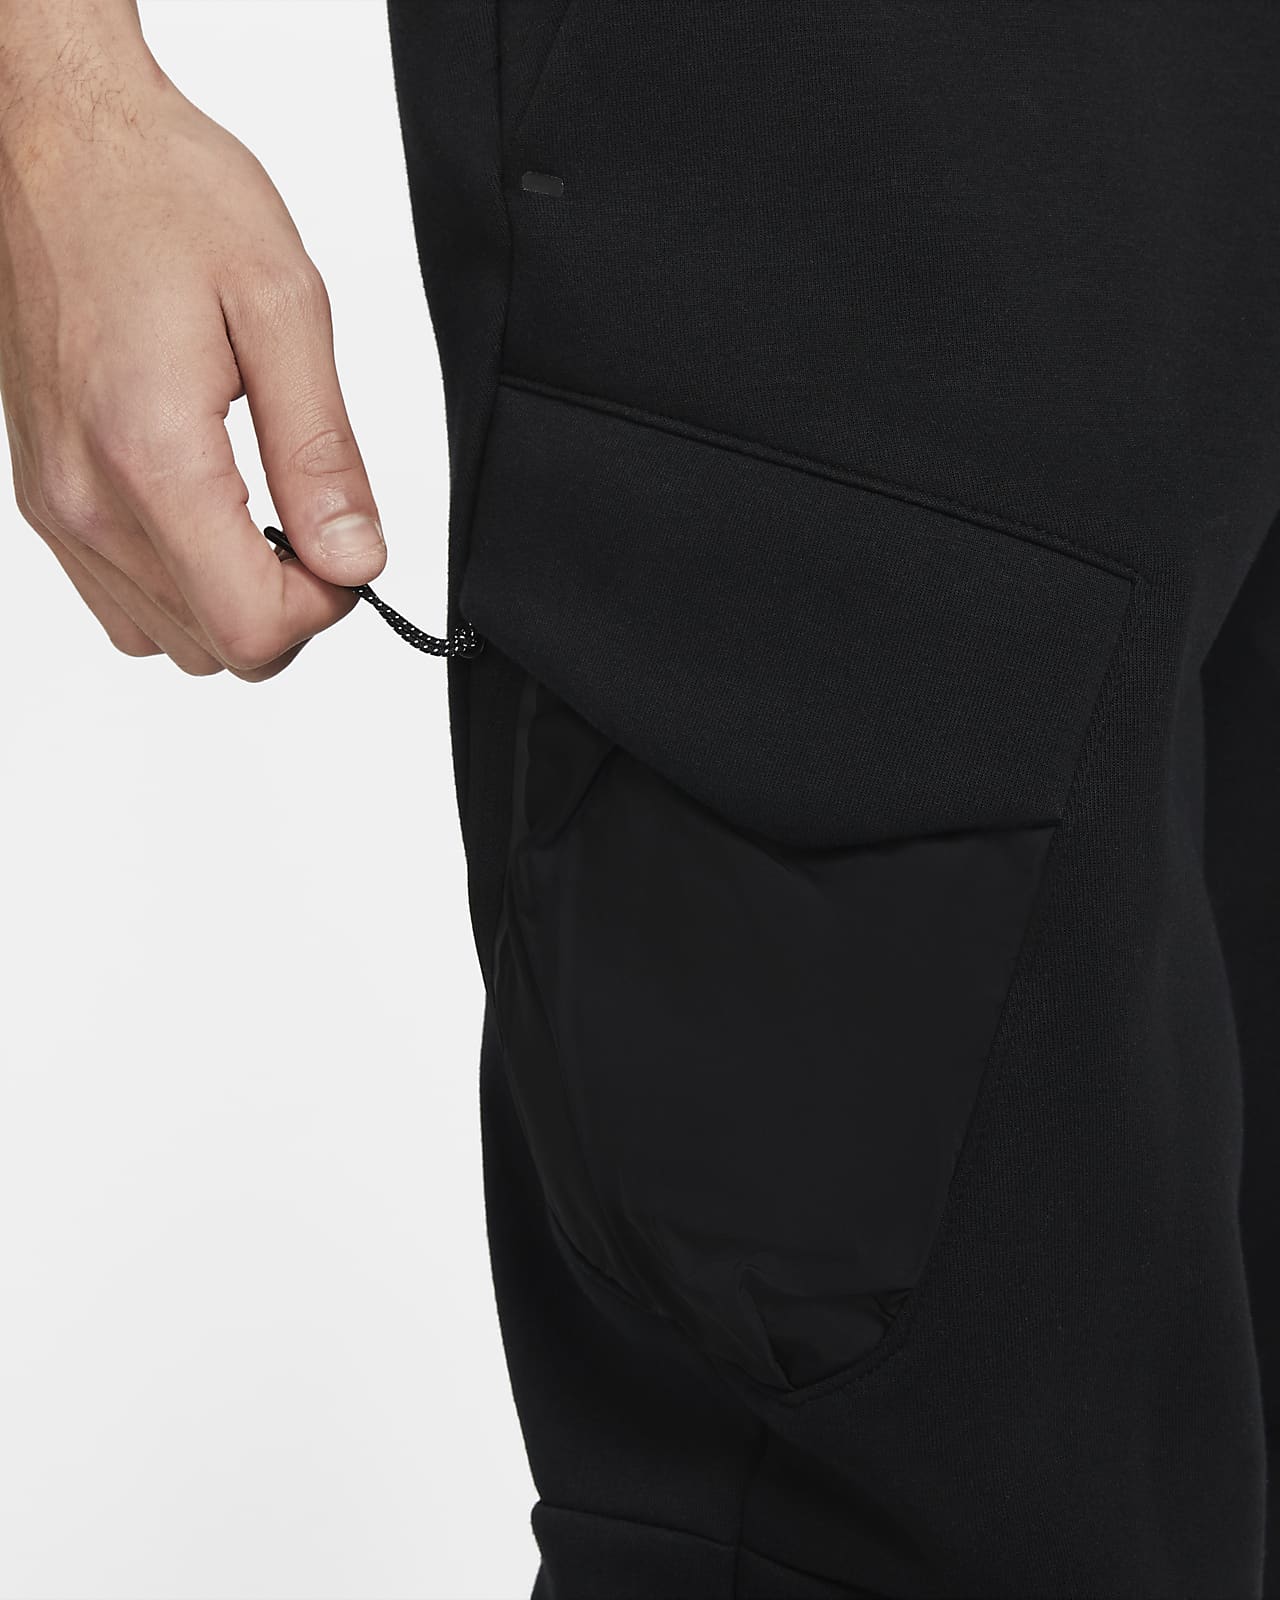 Nike Sportswear Tech Fleece Men's Utility Pants Size - Small Football  Grey/Light Smoke Grey-black : Clothing, Shoes & Jewelry 